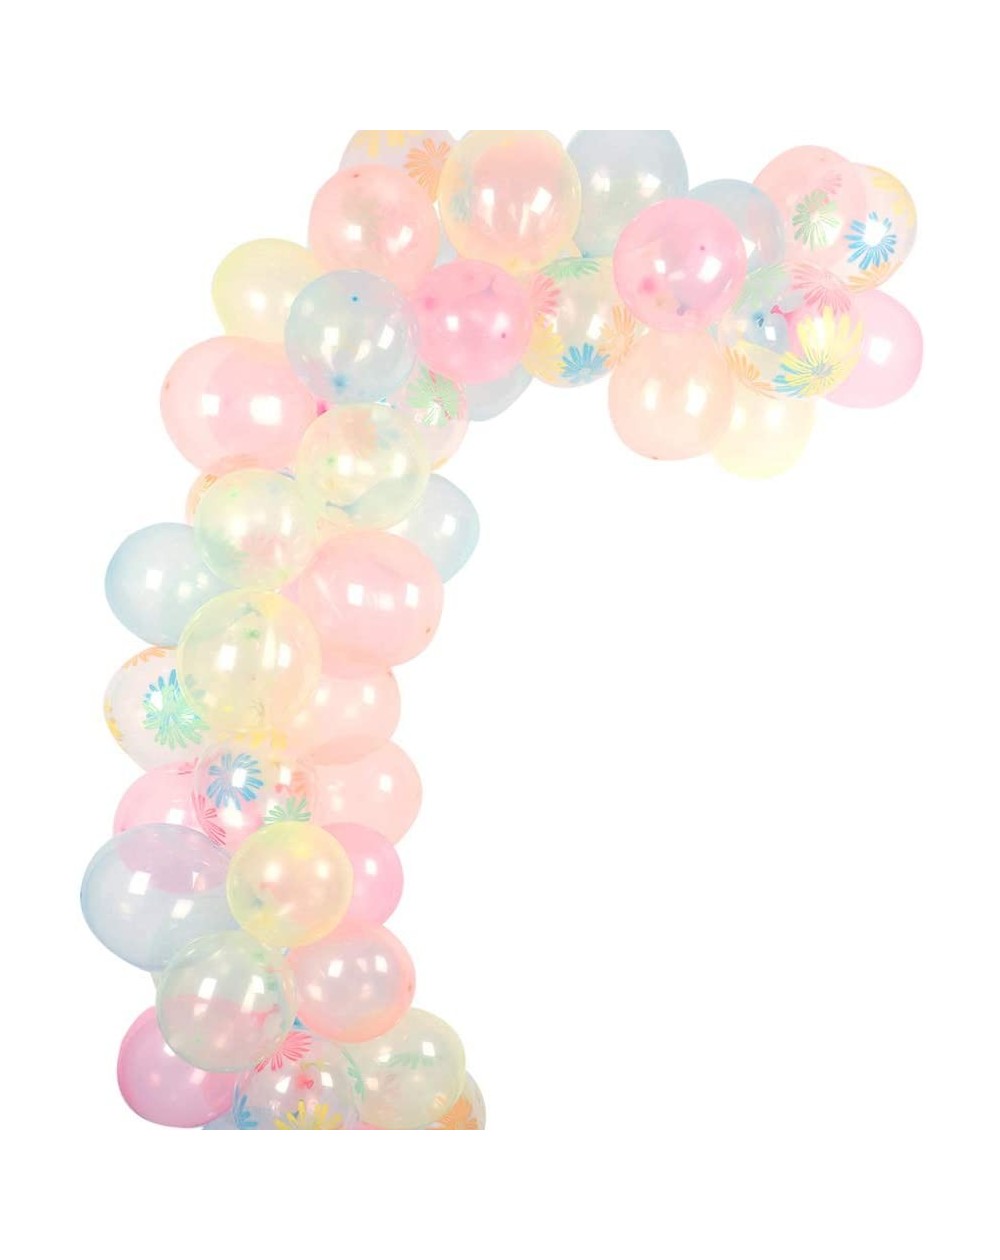 Balloons Crystal Clear Balloon Arch Garland Kit Transparent Party Balloons 12inch 60pcs Latex Pastel Rainbow Daisy Flowers Ba...